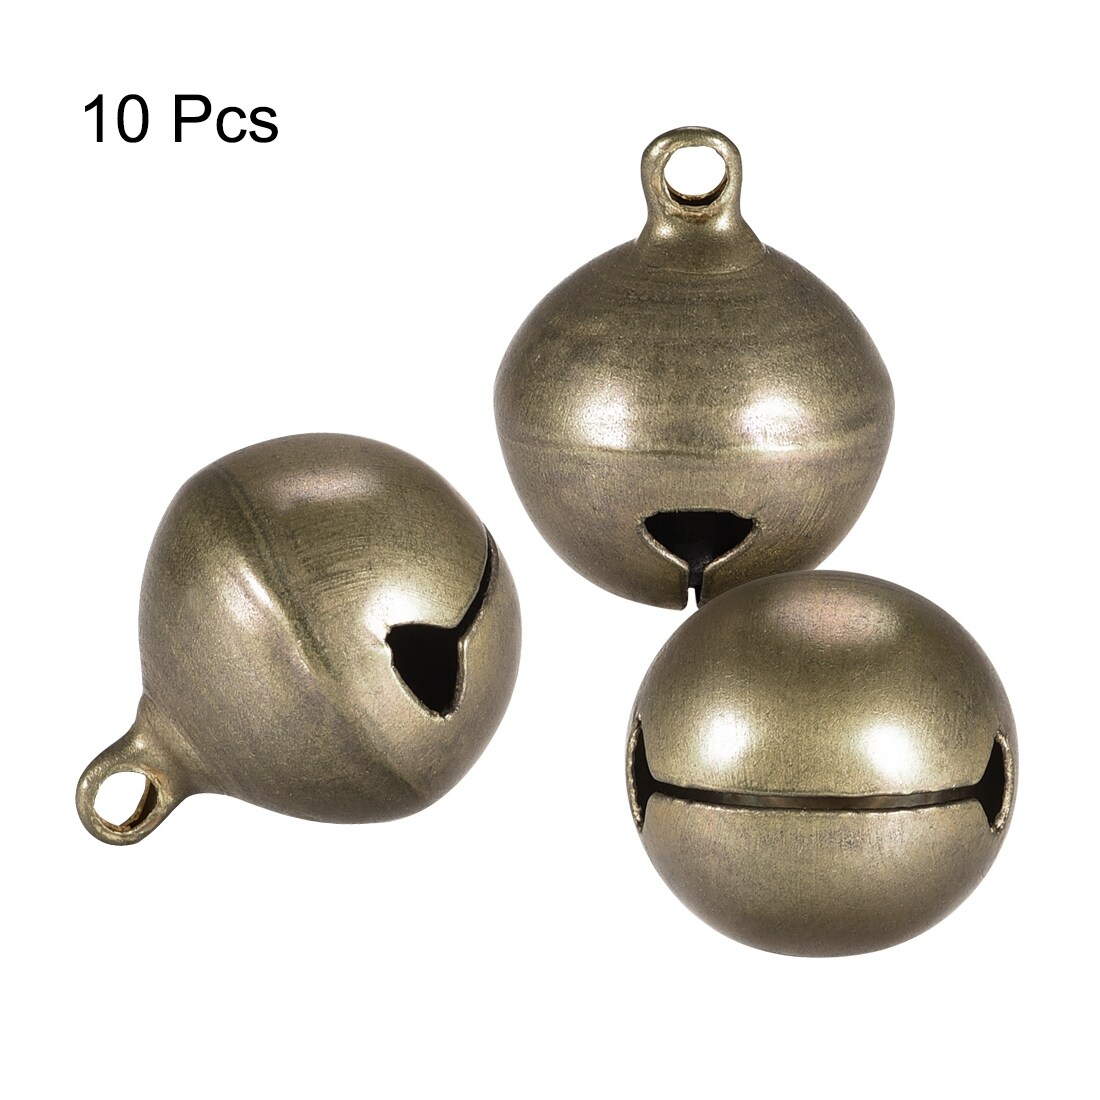  Jingle Bells, 100PCS Brass Bells for Crafts + 10 Jute Rope, 0.5  Inch Small Copper Bells, DIY Mini Bells Bulk, Loud Sound Jingle Bells,  Bronze Jingle Bell for Christmas Decorations, Home/Pet/Gift